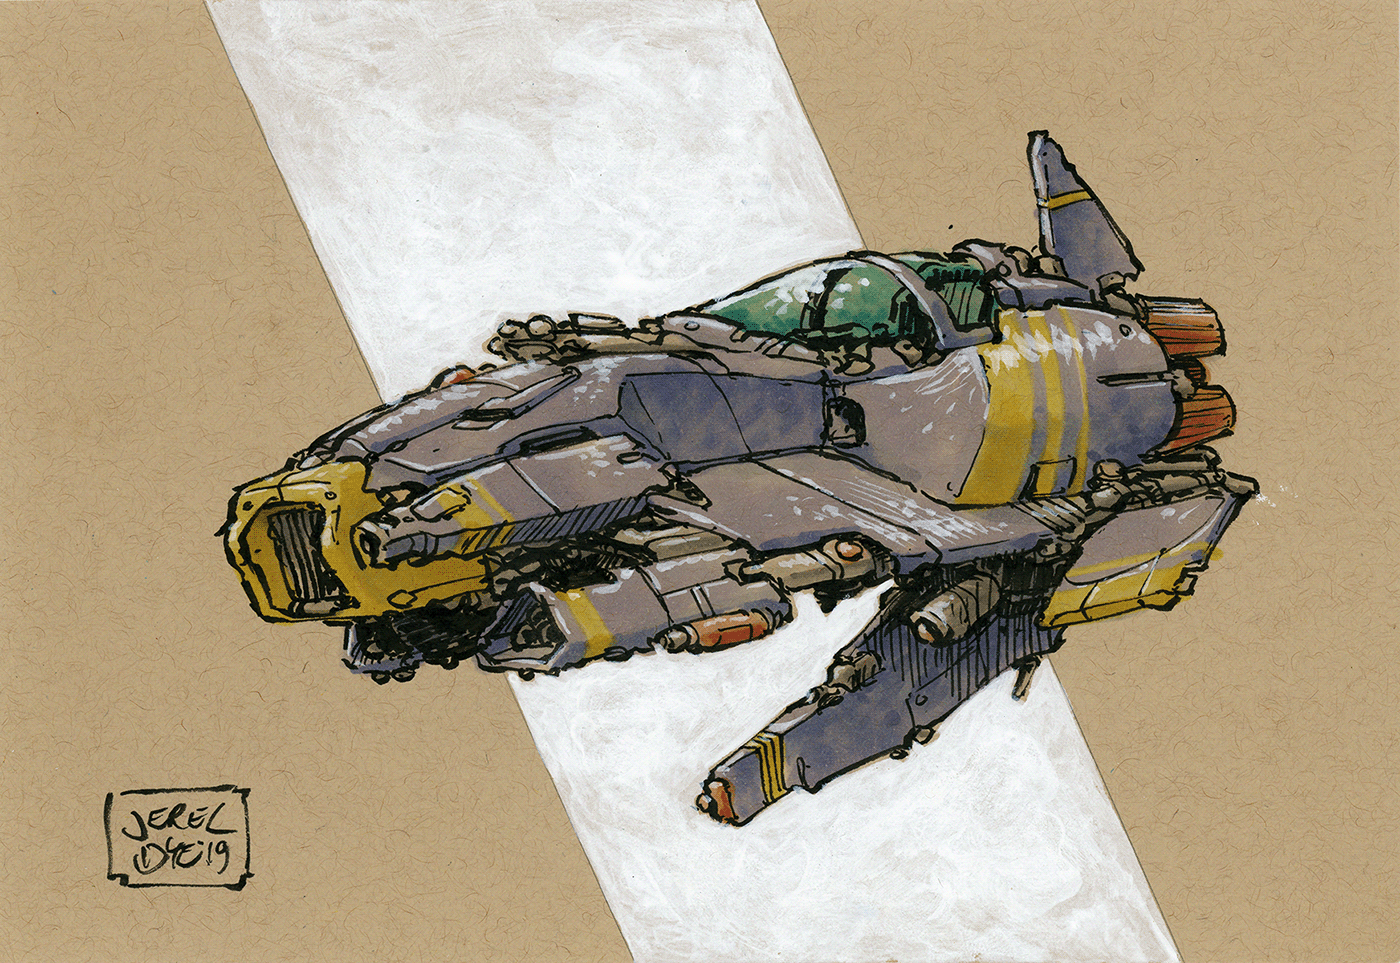 Drawing  Sciencefiction vehicledesign conceptart ComicsIllustration Cartooning  hardsurfacedesign Scifi spaceships